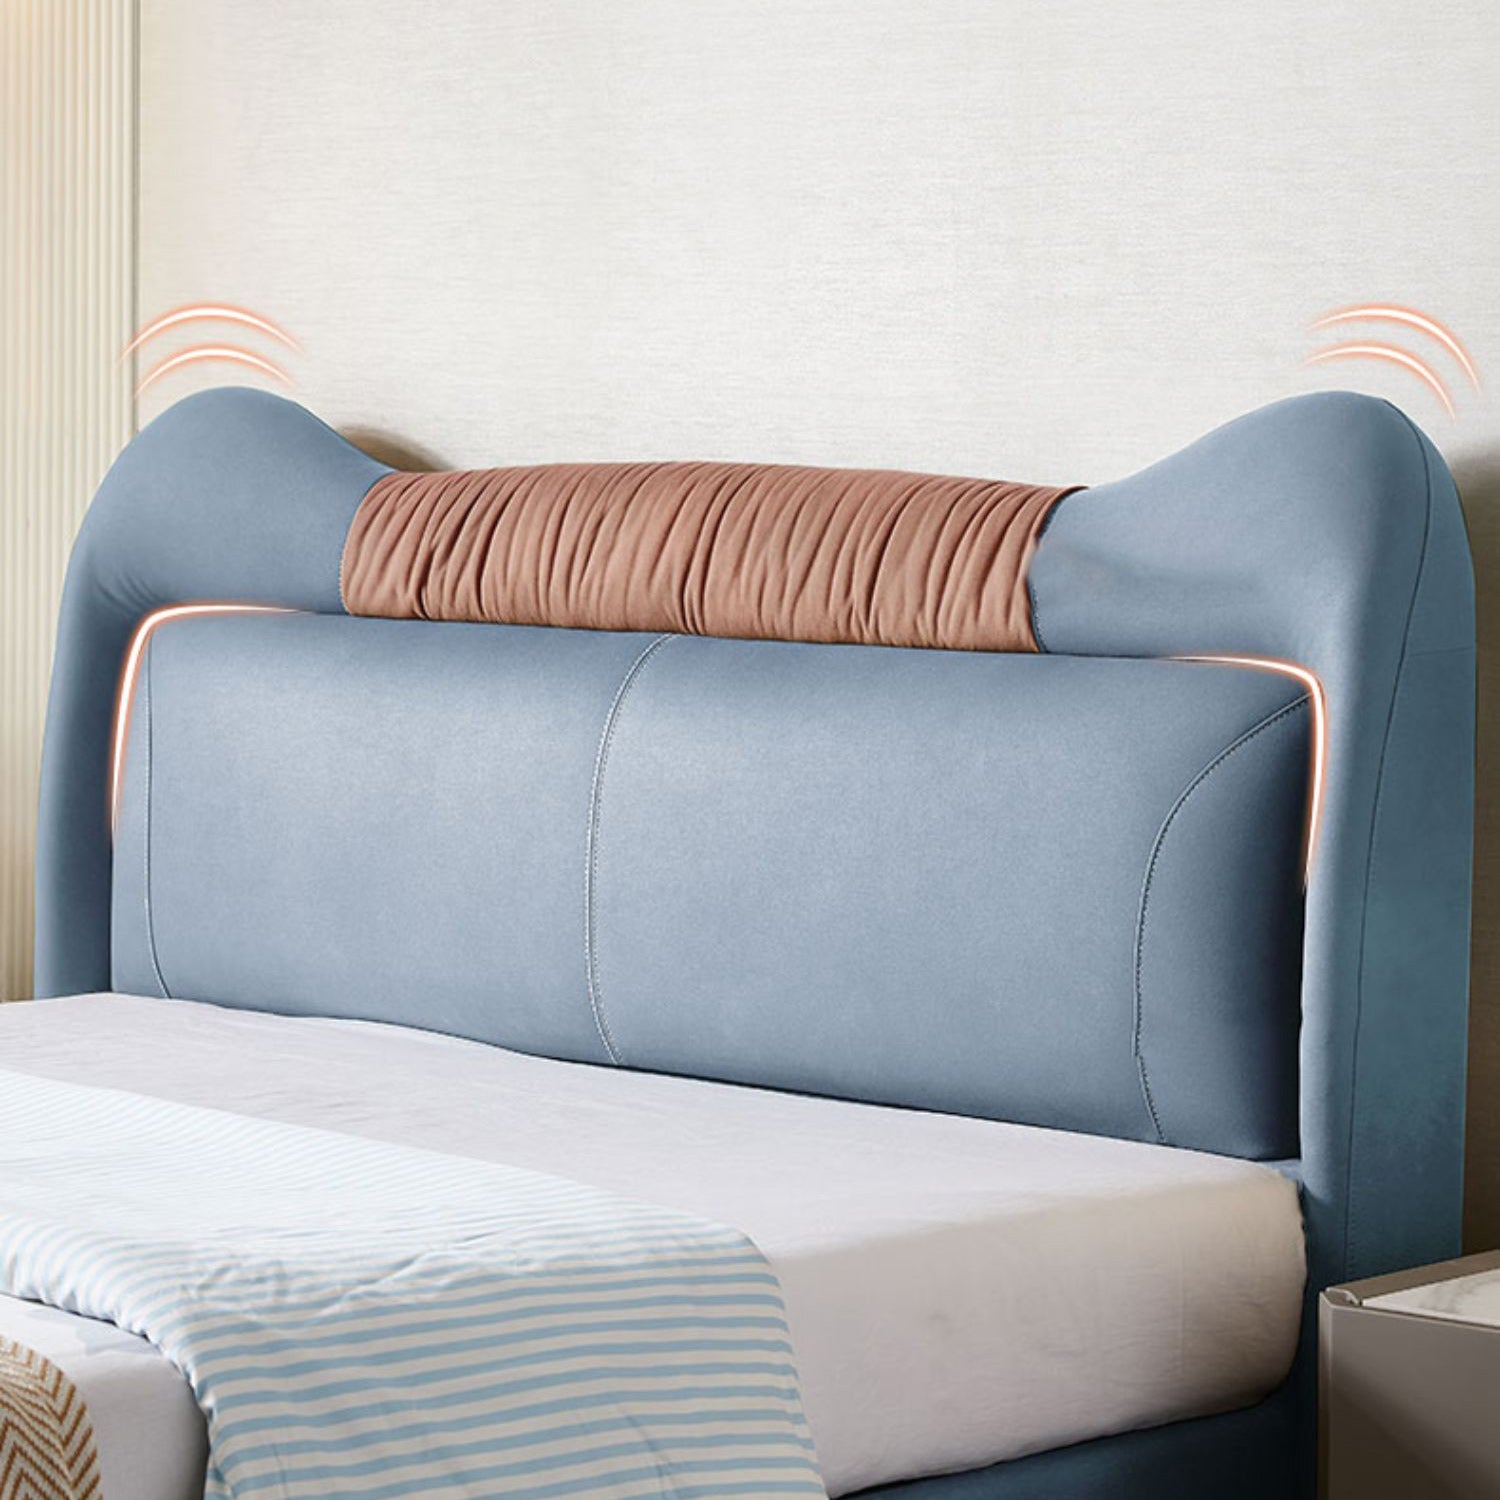 Upholstered Low Bed Frame Scandinavian Full Size Standard Bed